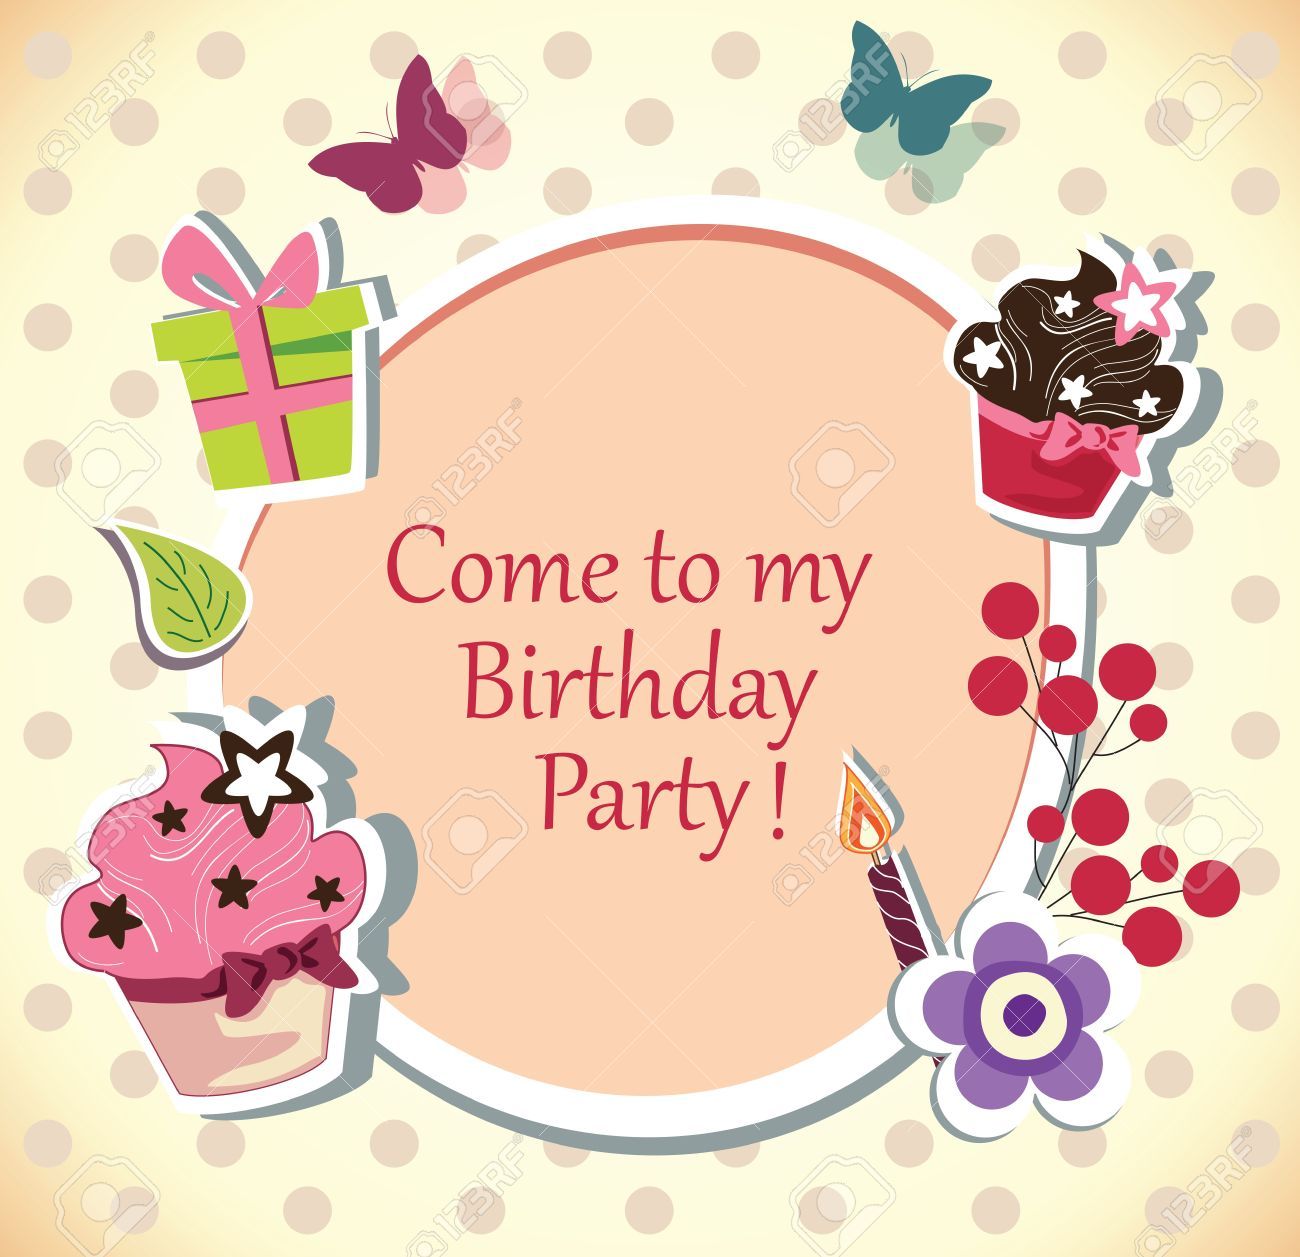 Free birthday party invitation clipart 3 » Clipart Portal.